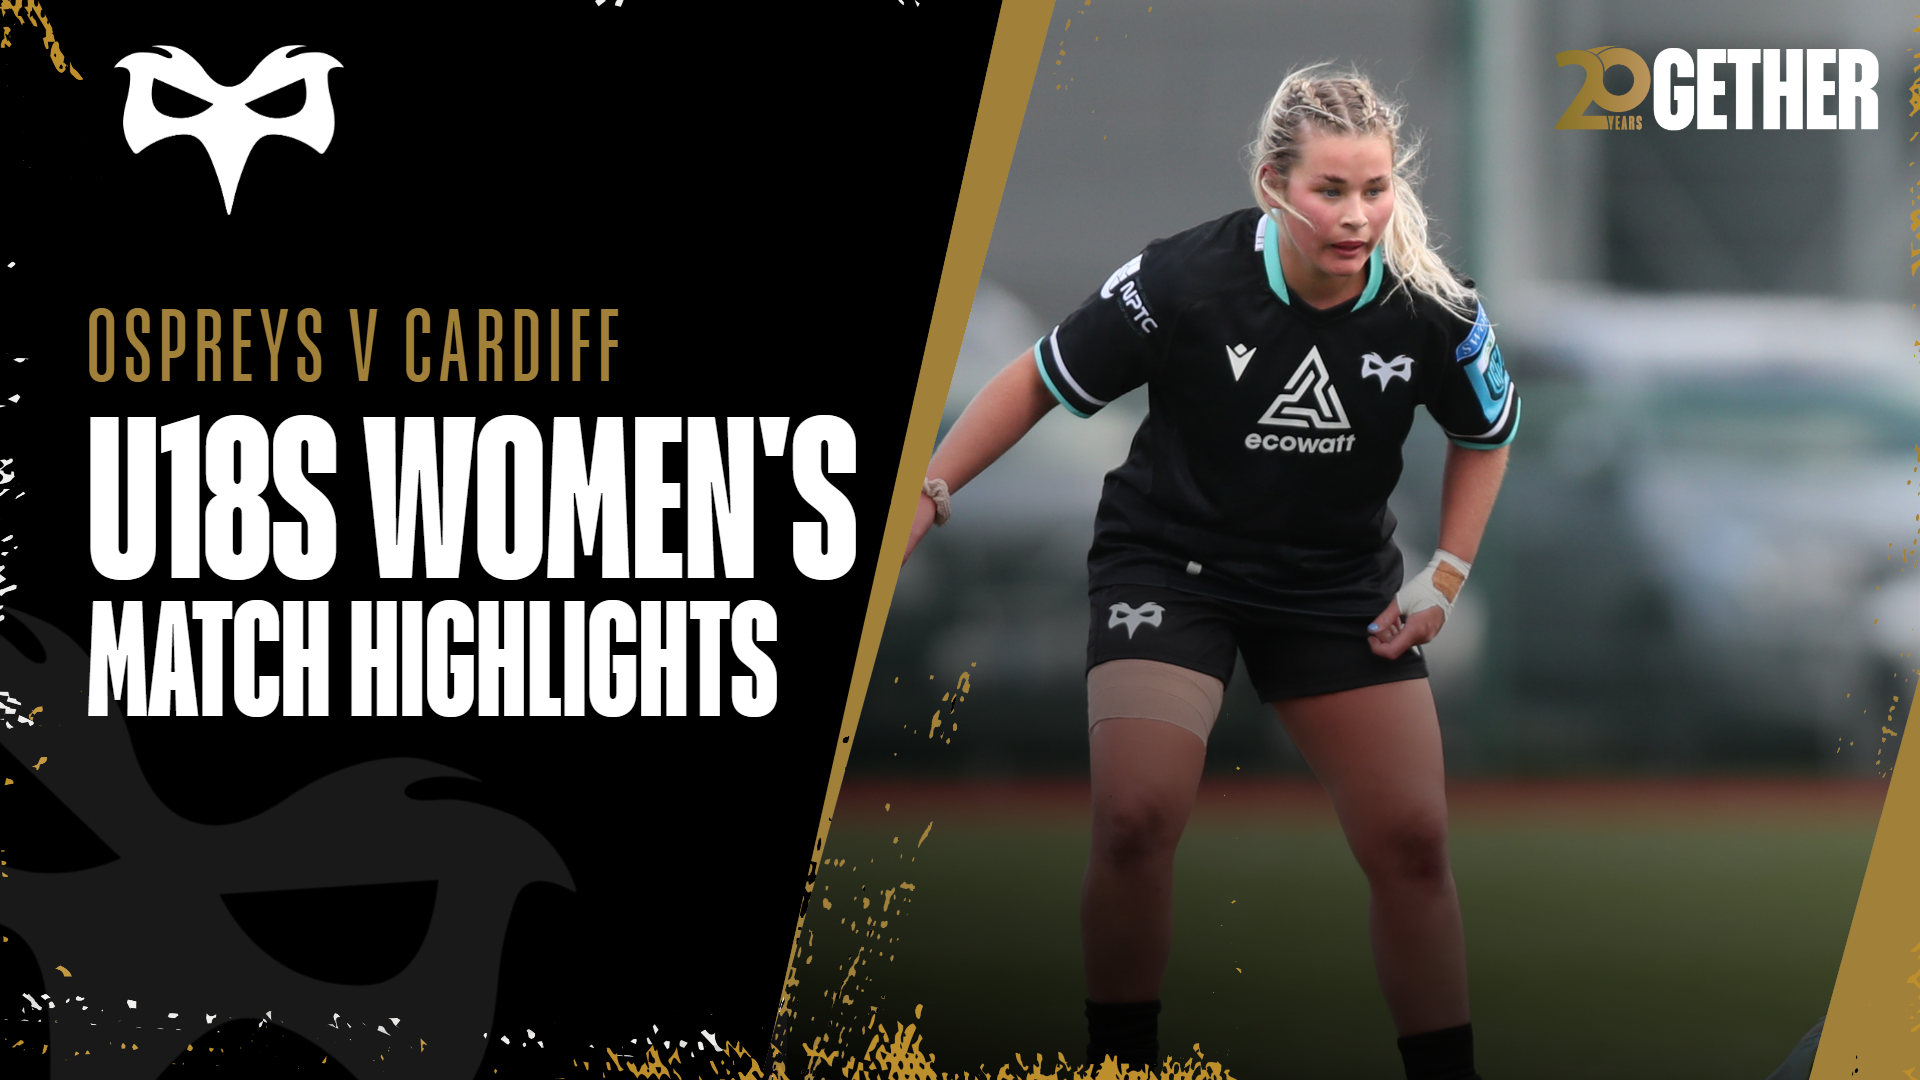 Match Highlights: Ospreys Women's U18s v Cardiff Rugby Women's U18s